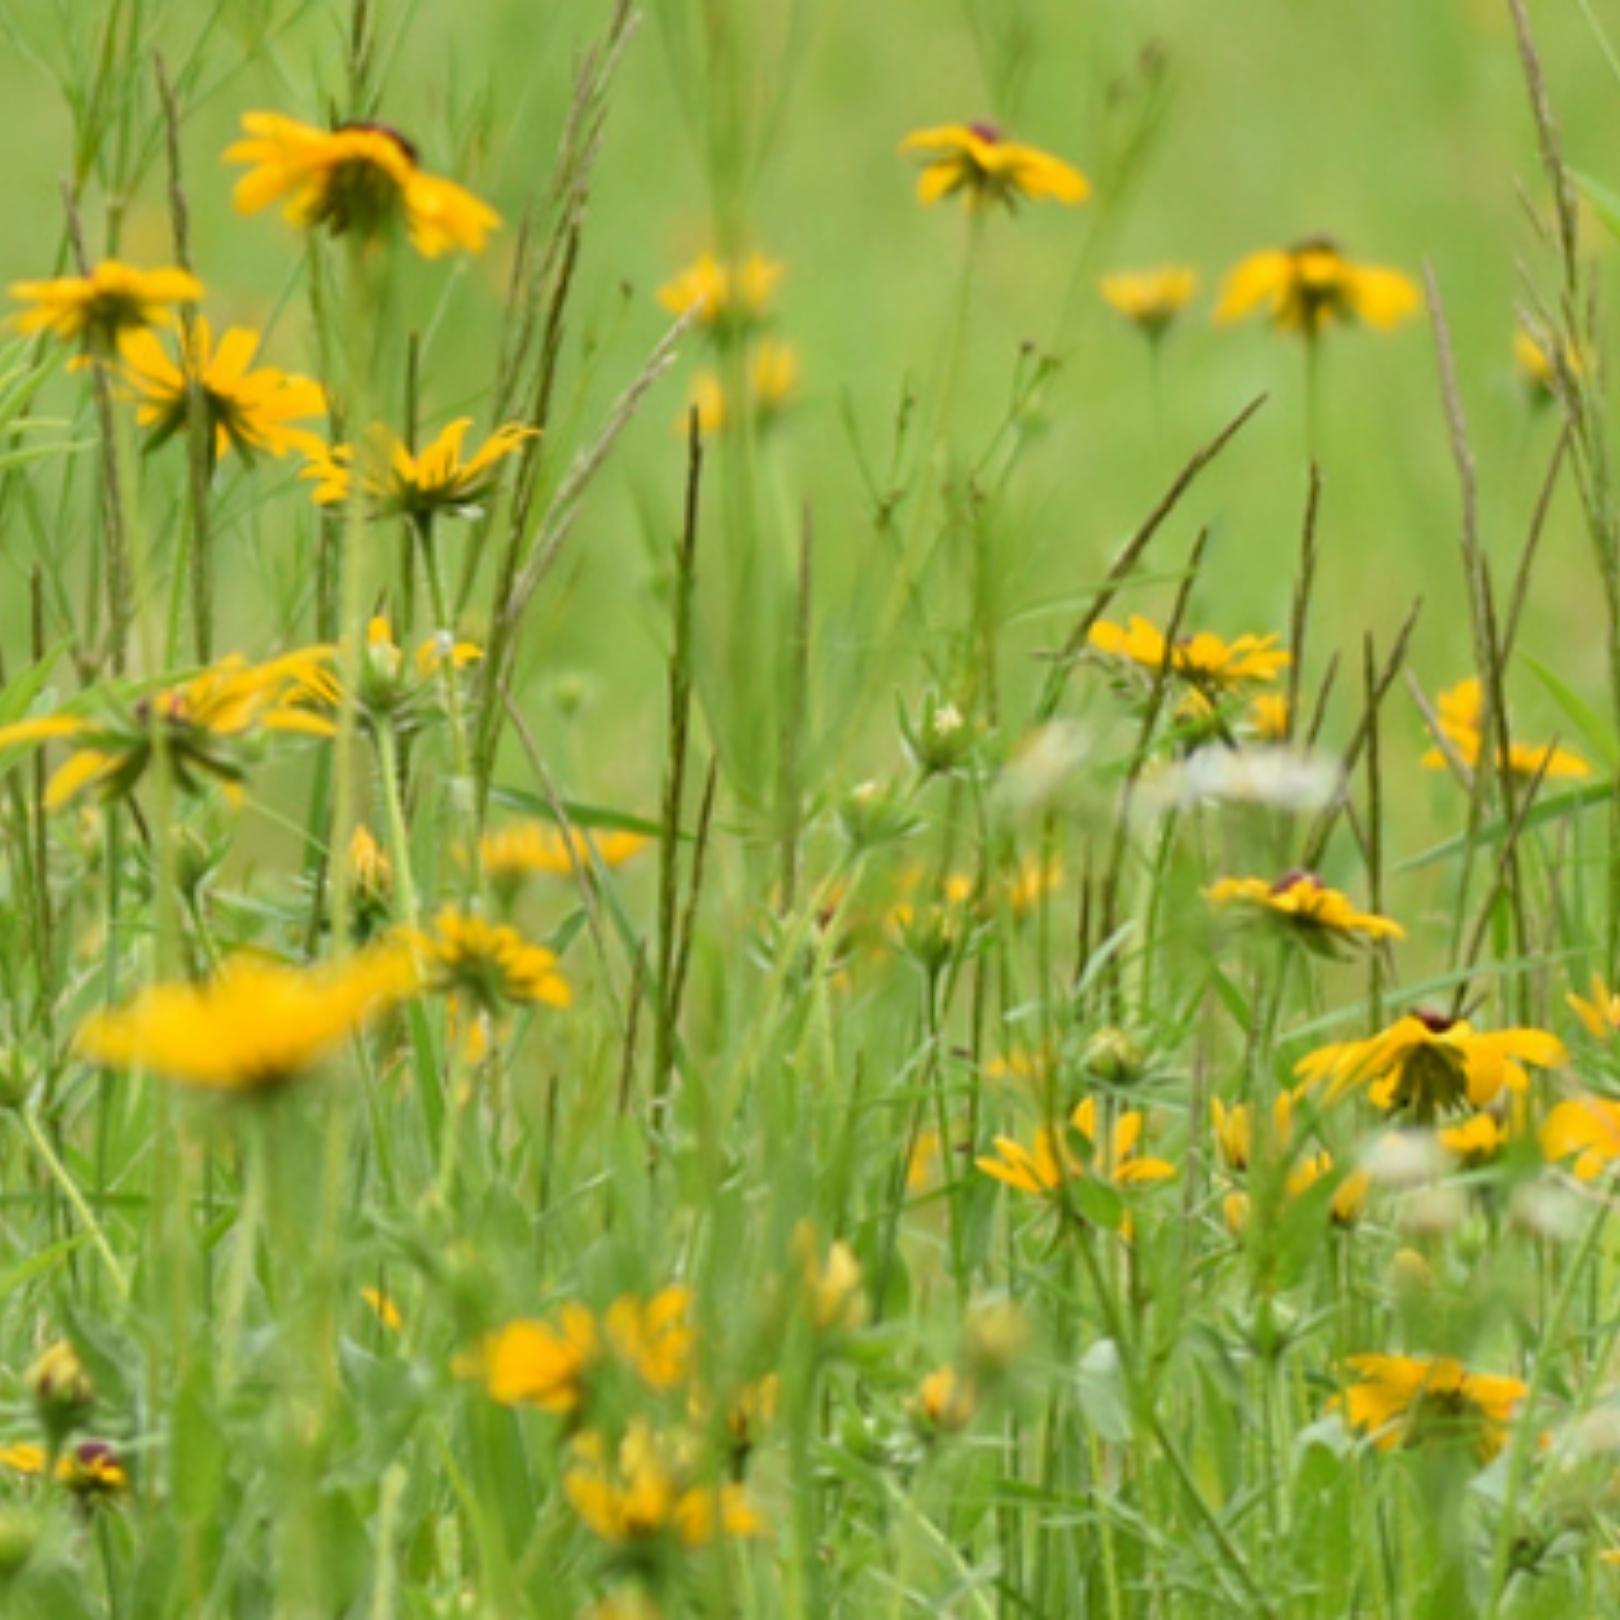 A field of yellow wildlfowers